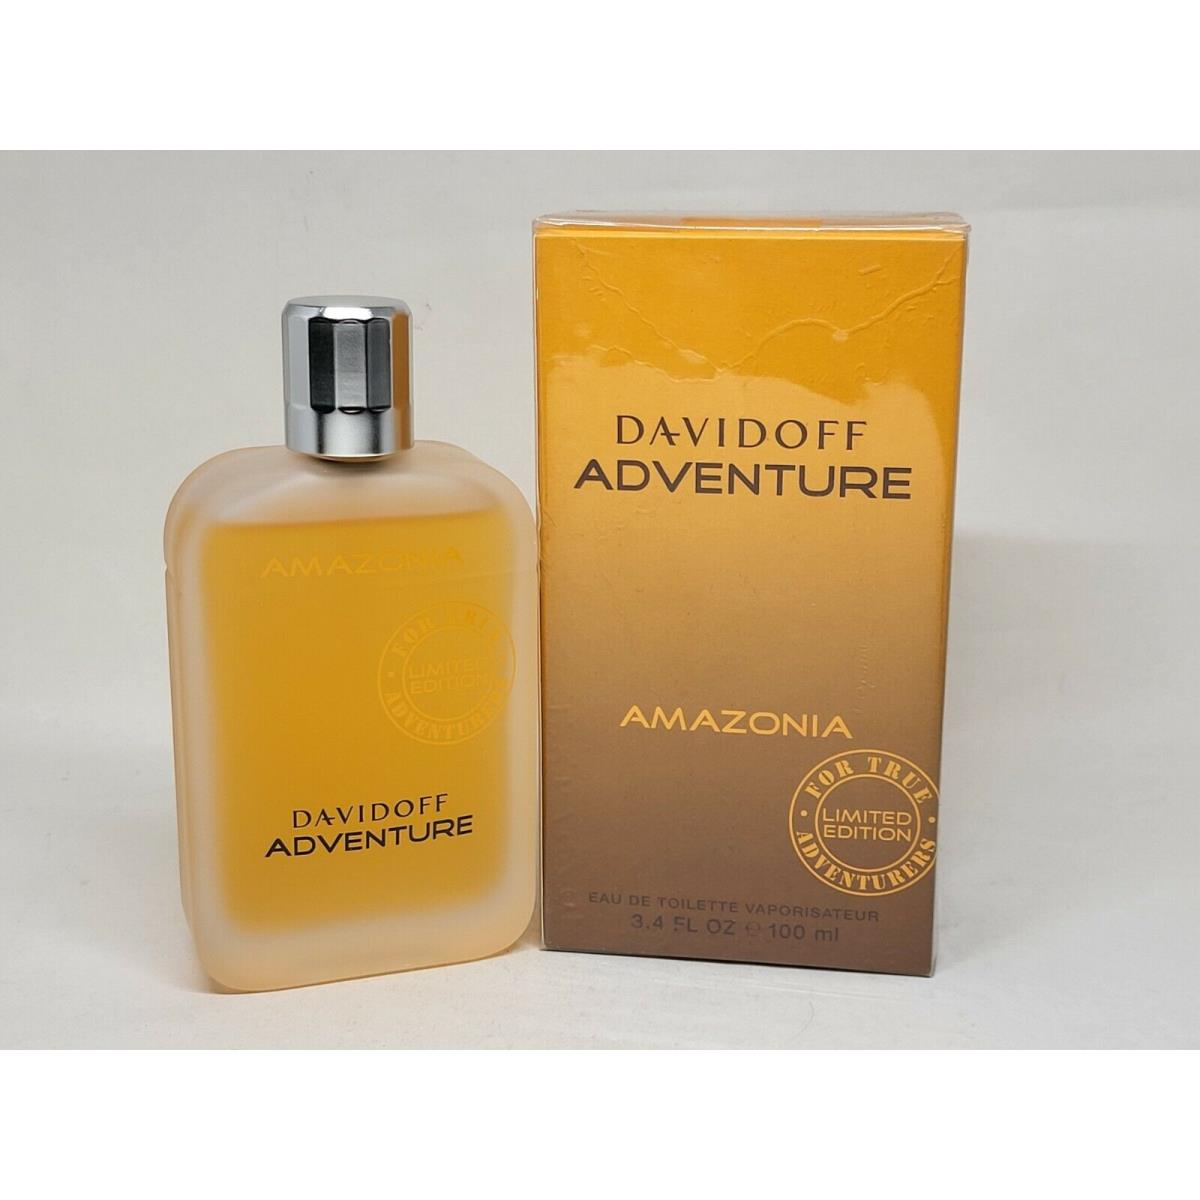 Davidoff Adventure Amazonia Eau De Toilette 3.4 Oz / 100 ml Limited Edition